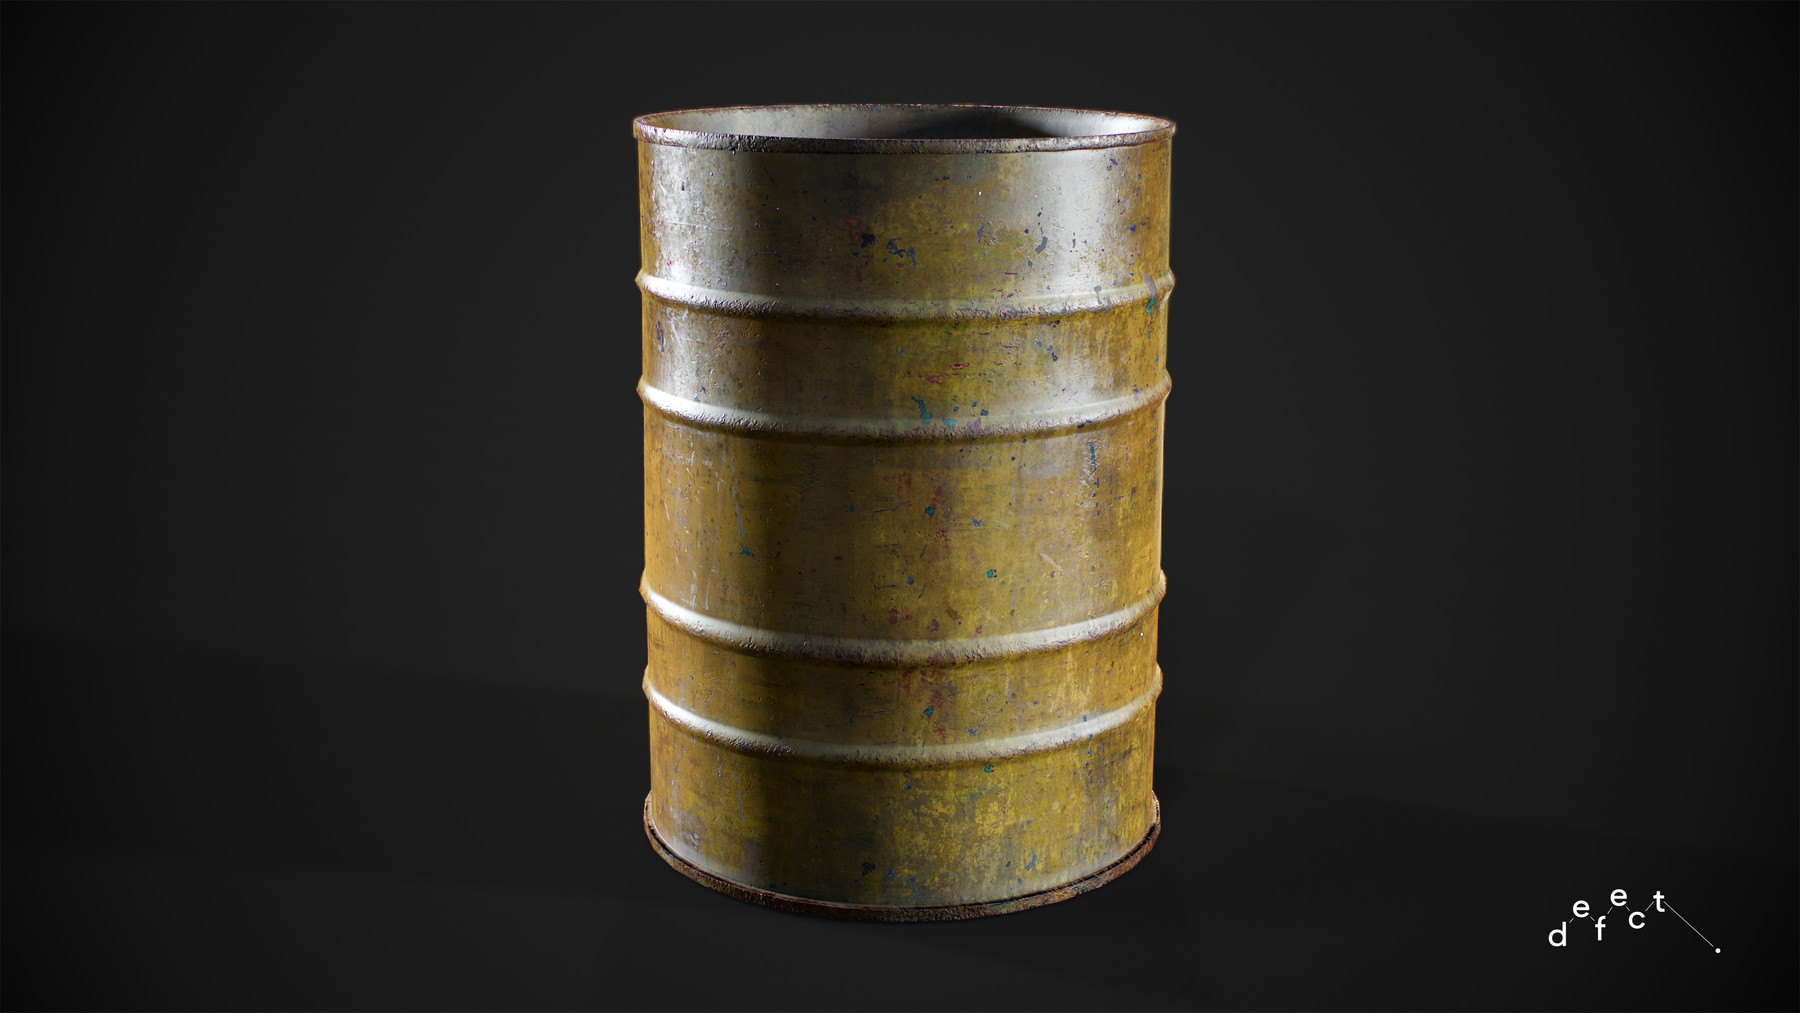 rusty barrel